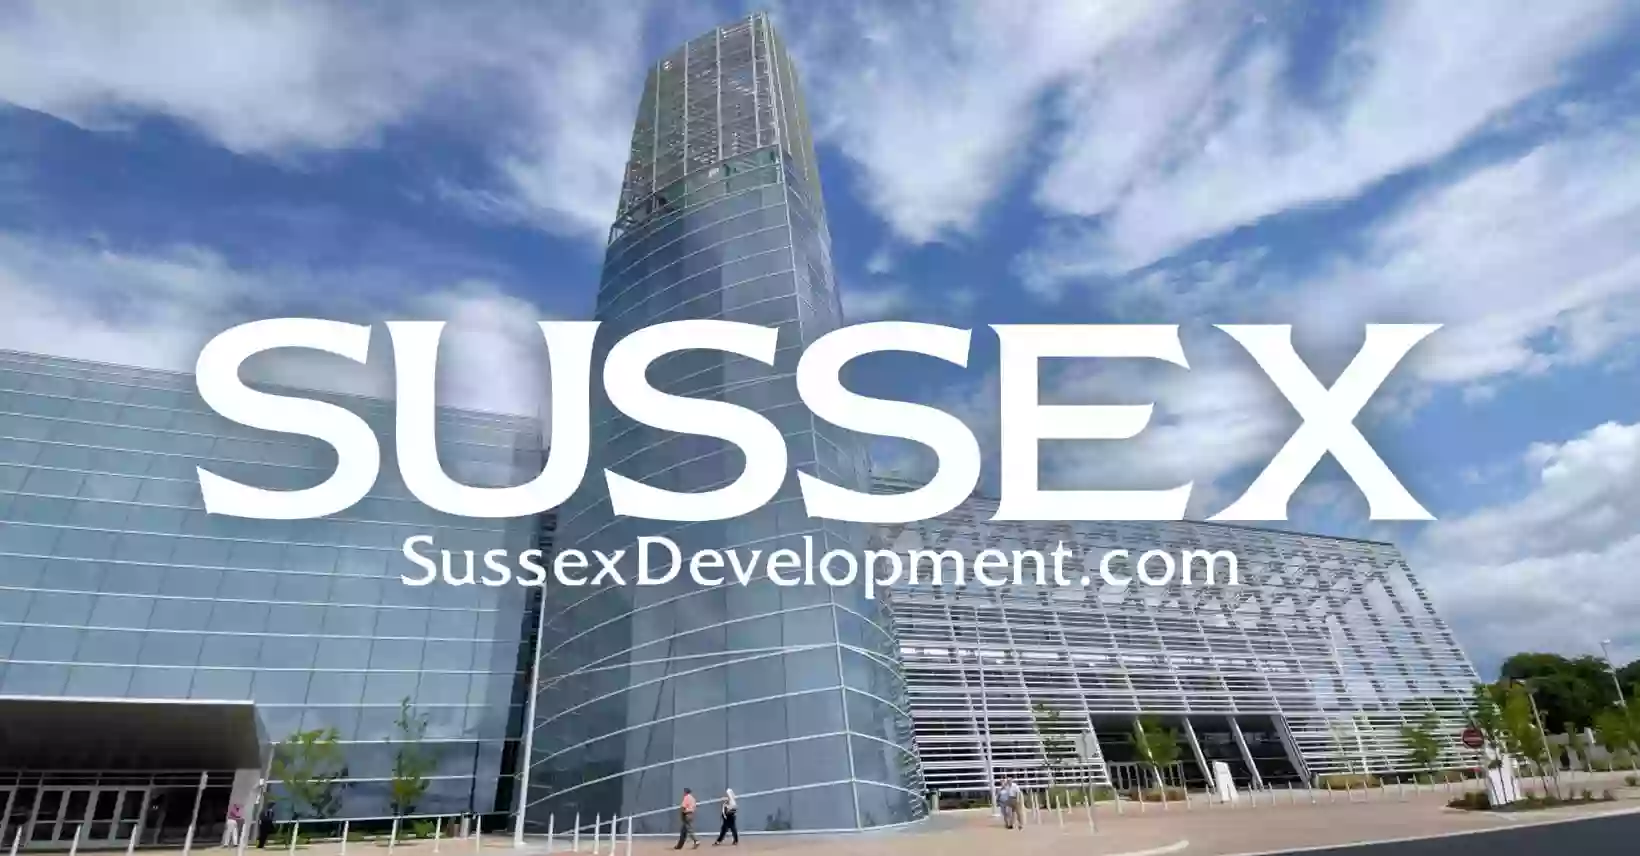 Sussex Development Corporation